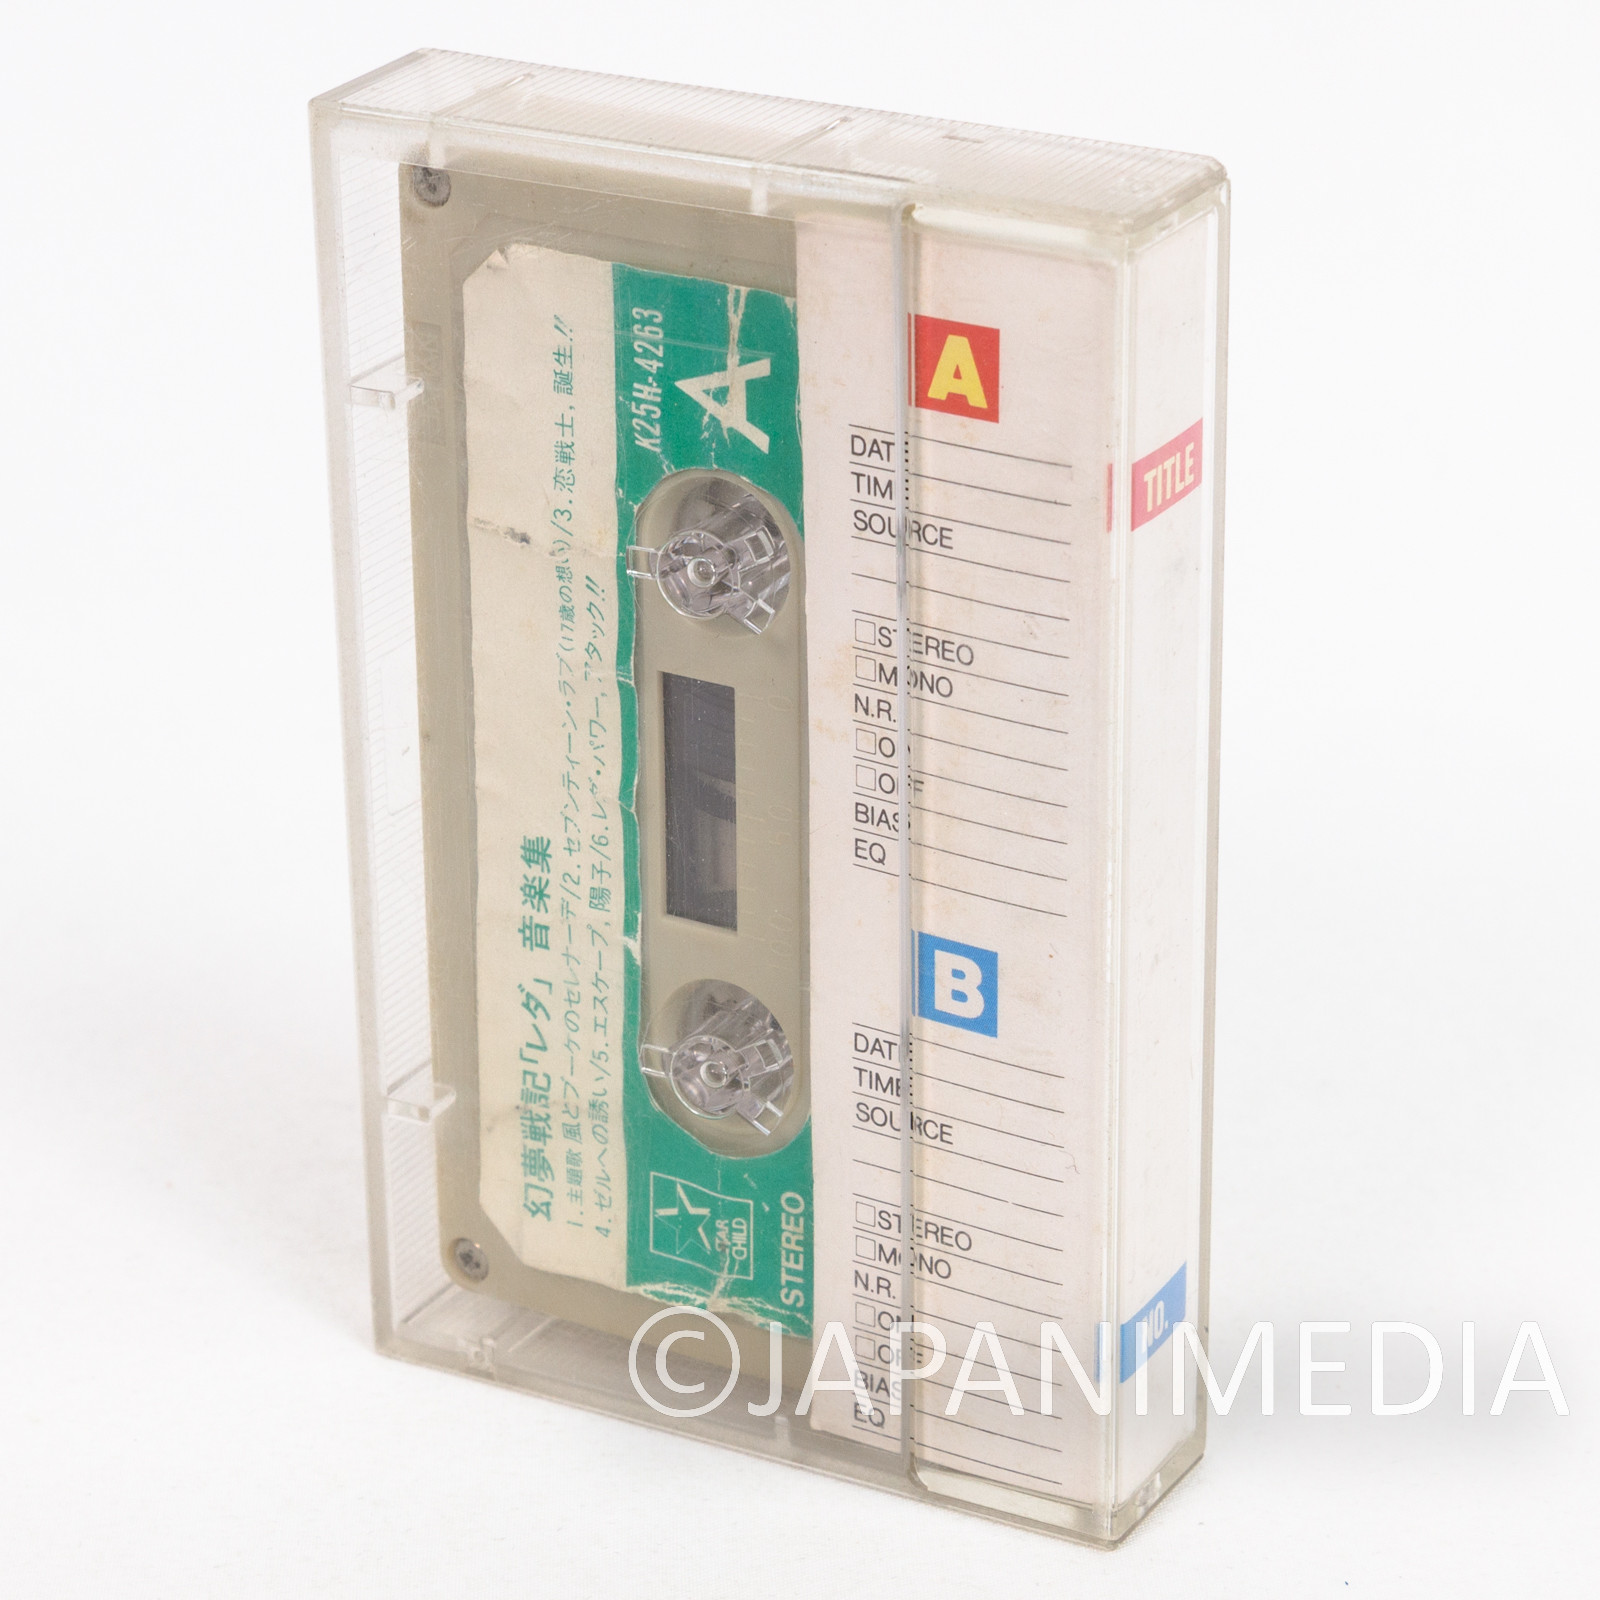 Leda: The Fantastic Adventure of Yohko Asagiri Sound Track Music Cassette Tape